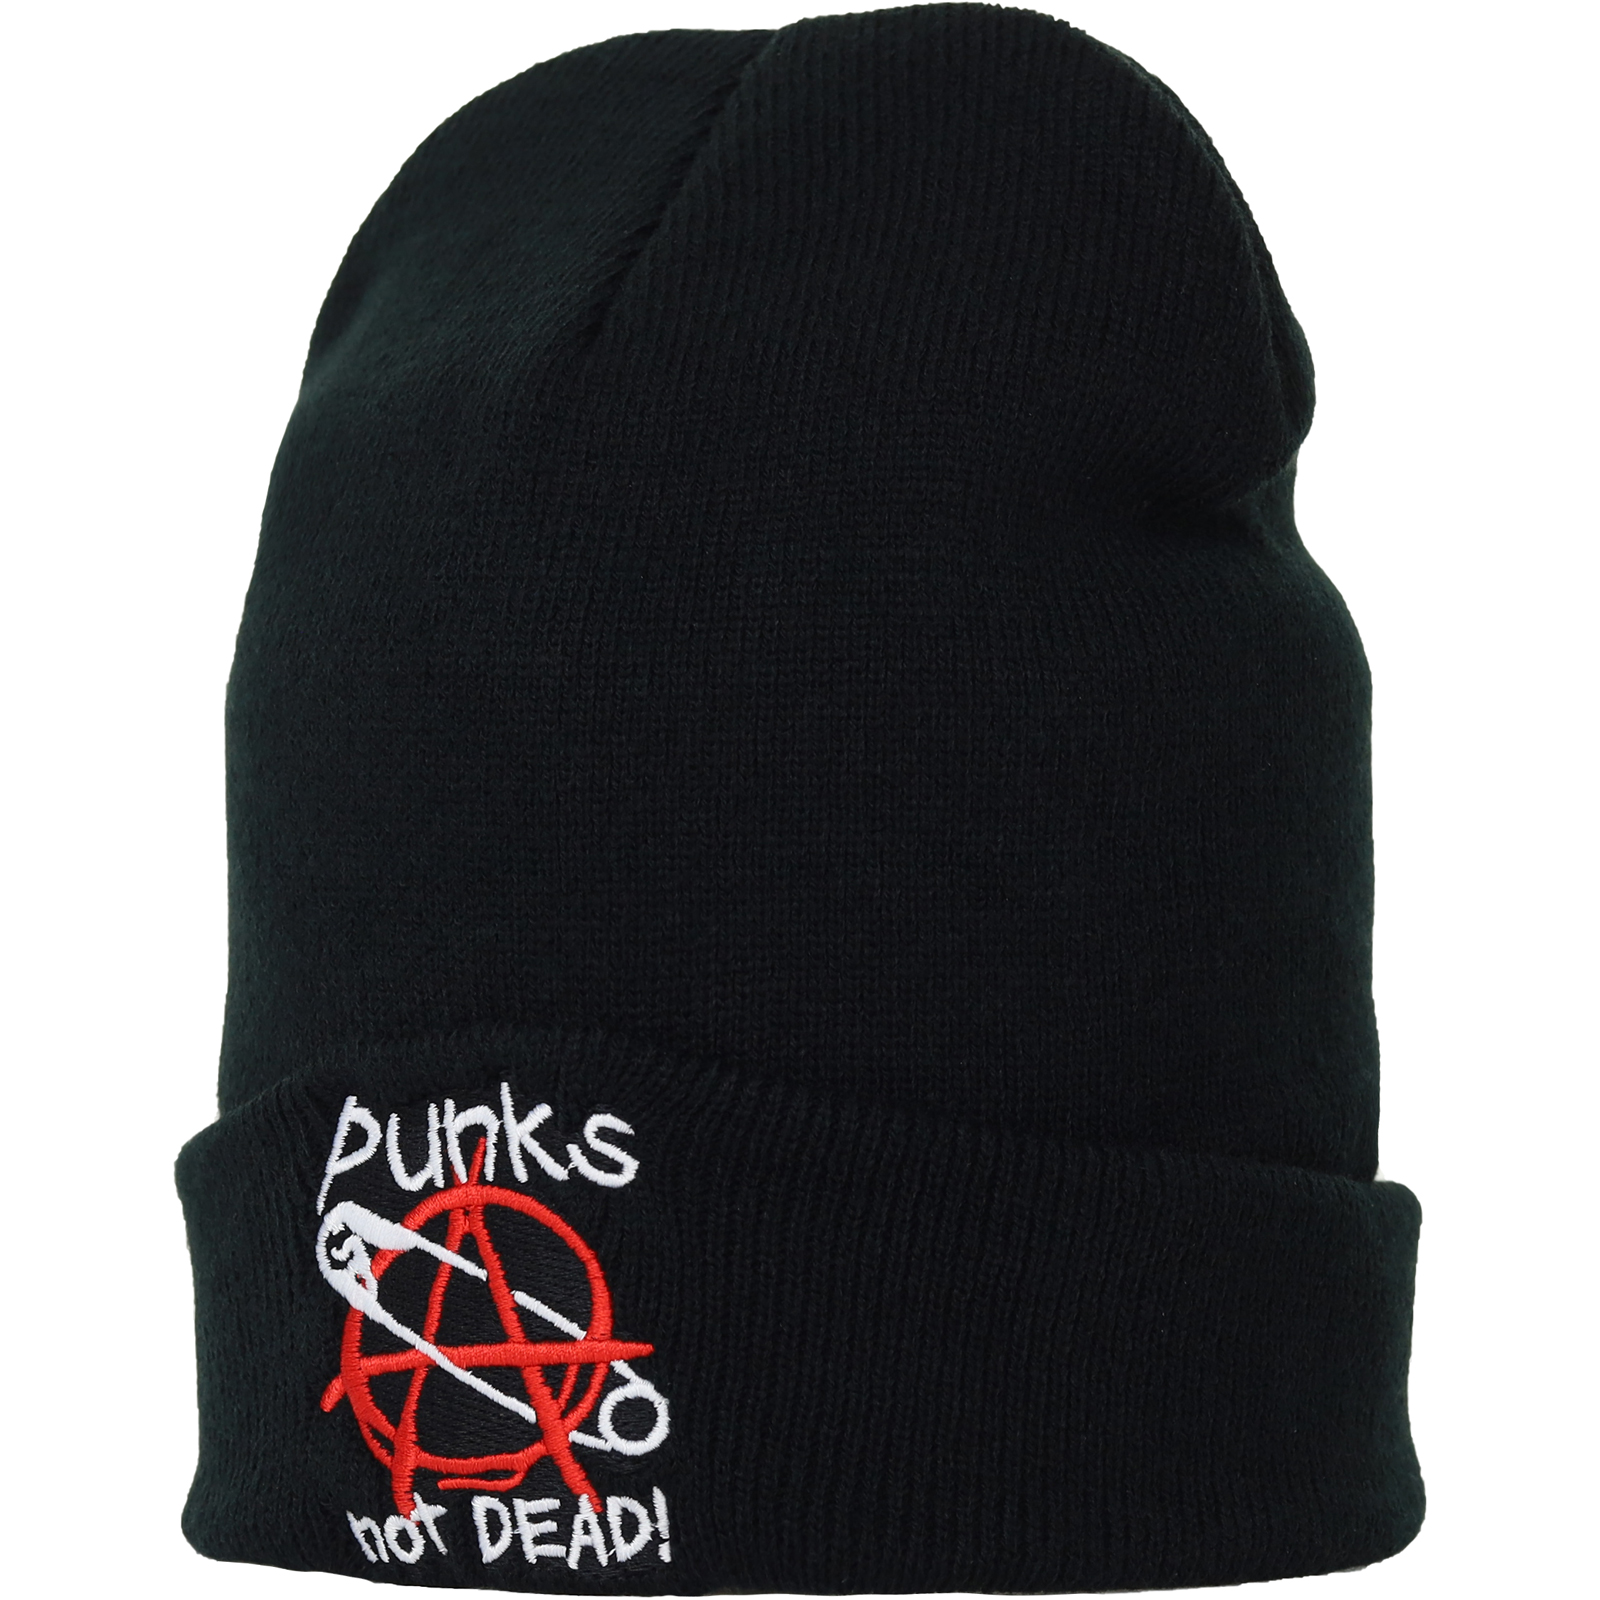 Punks are not dead - Strickmütze